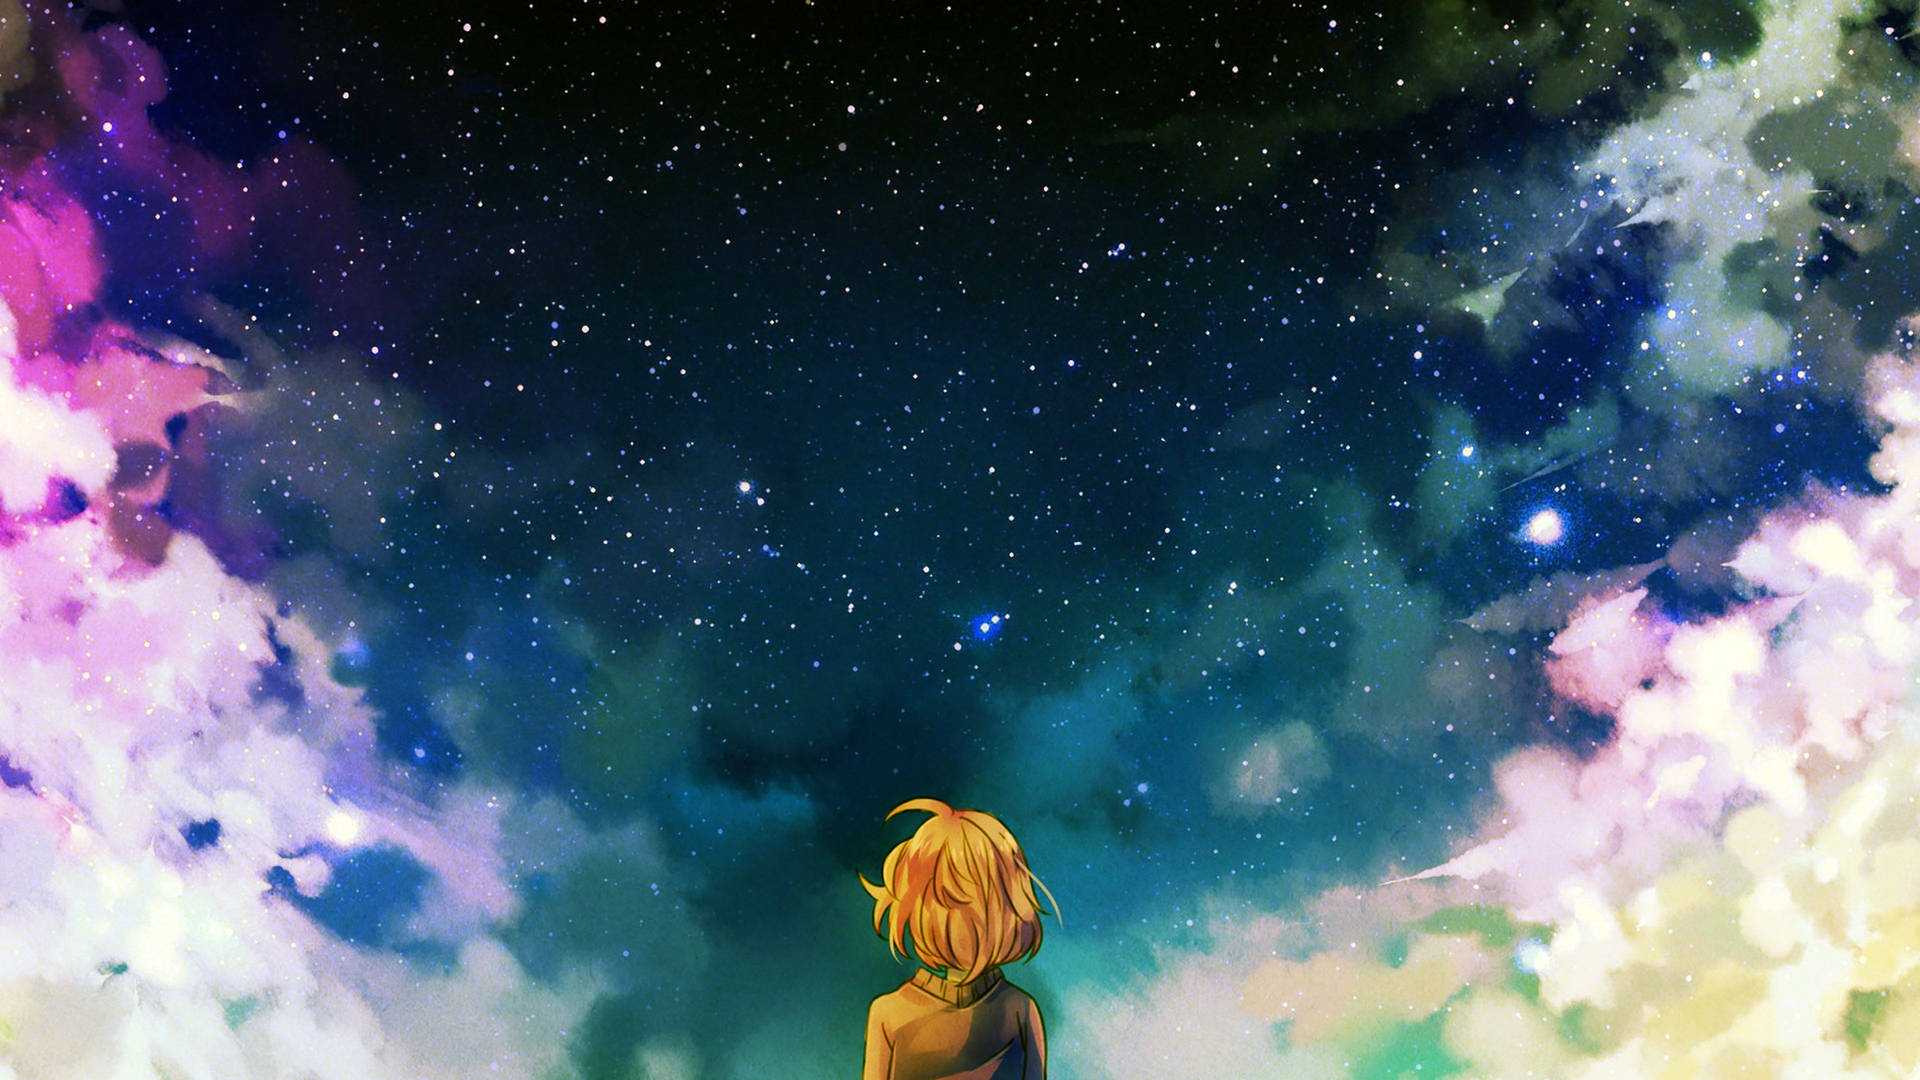 A dreamlike night sky filled with stars Wallpaper